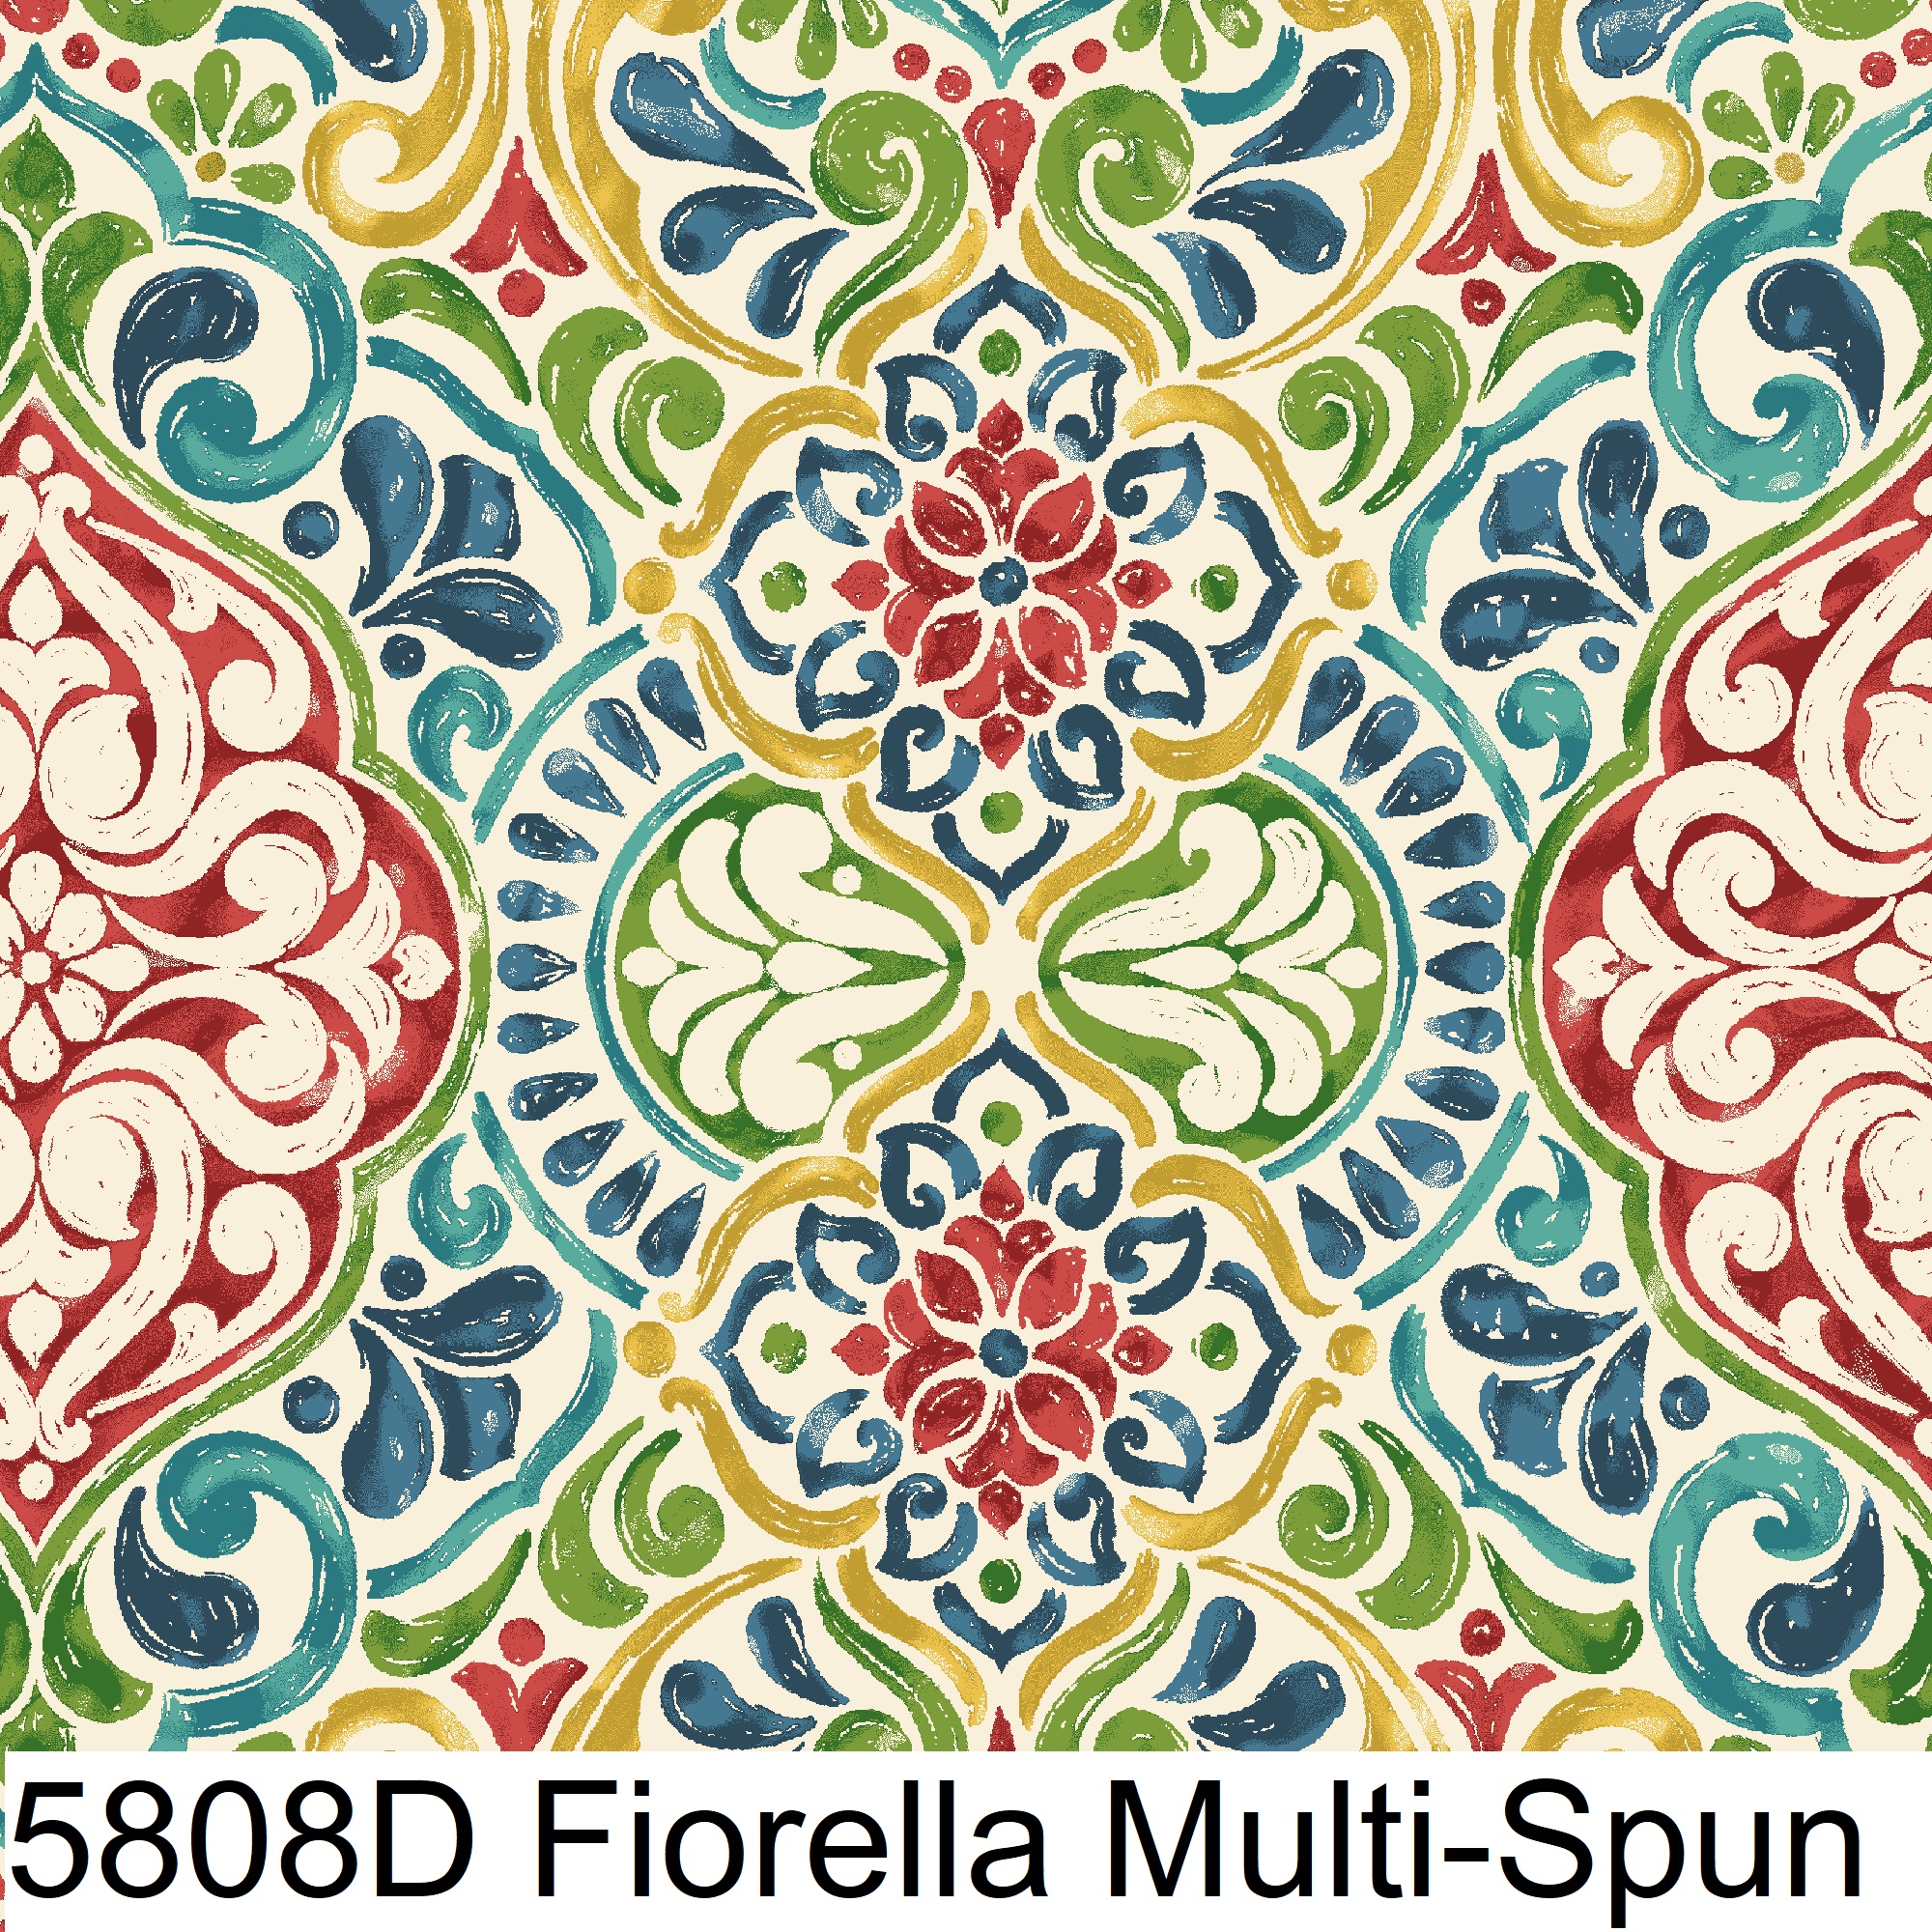 5808D Fiorella Multi-Spun